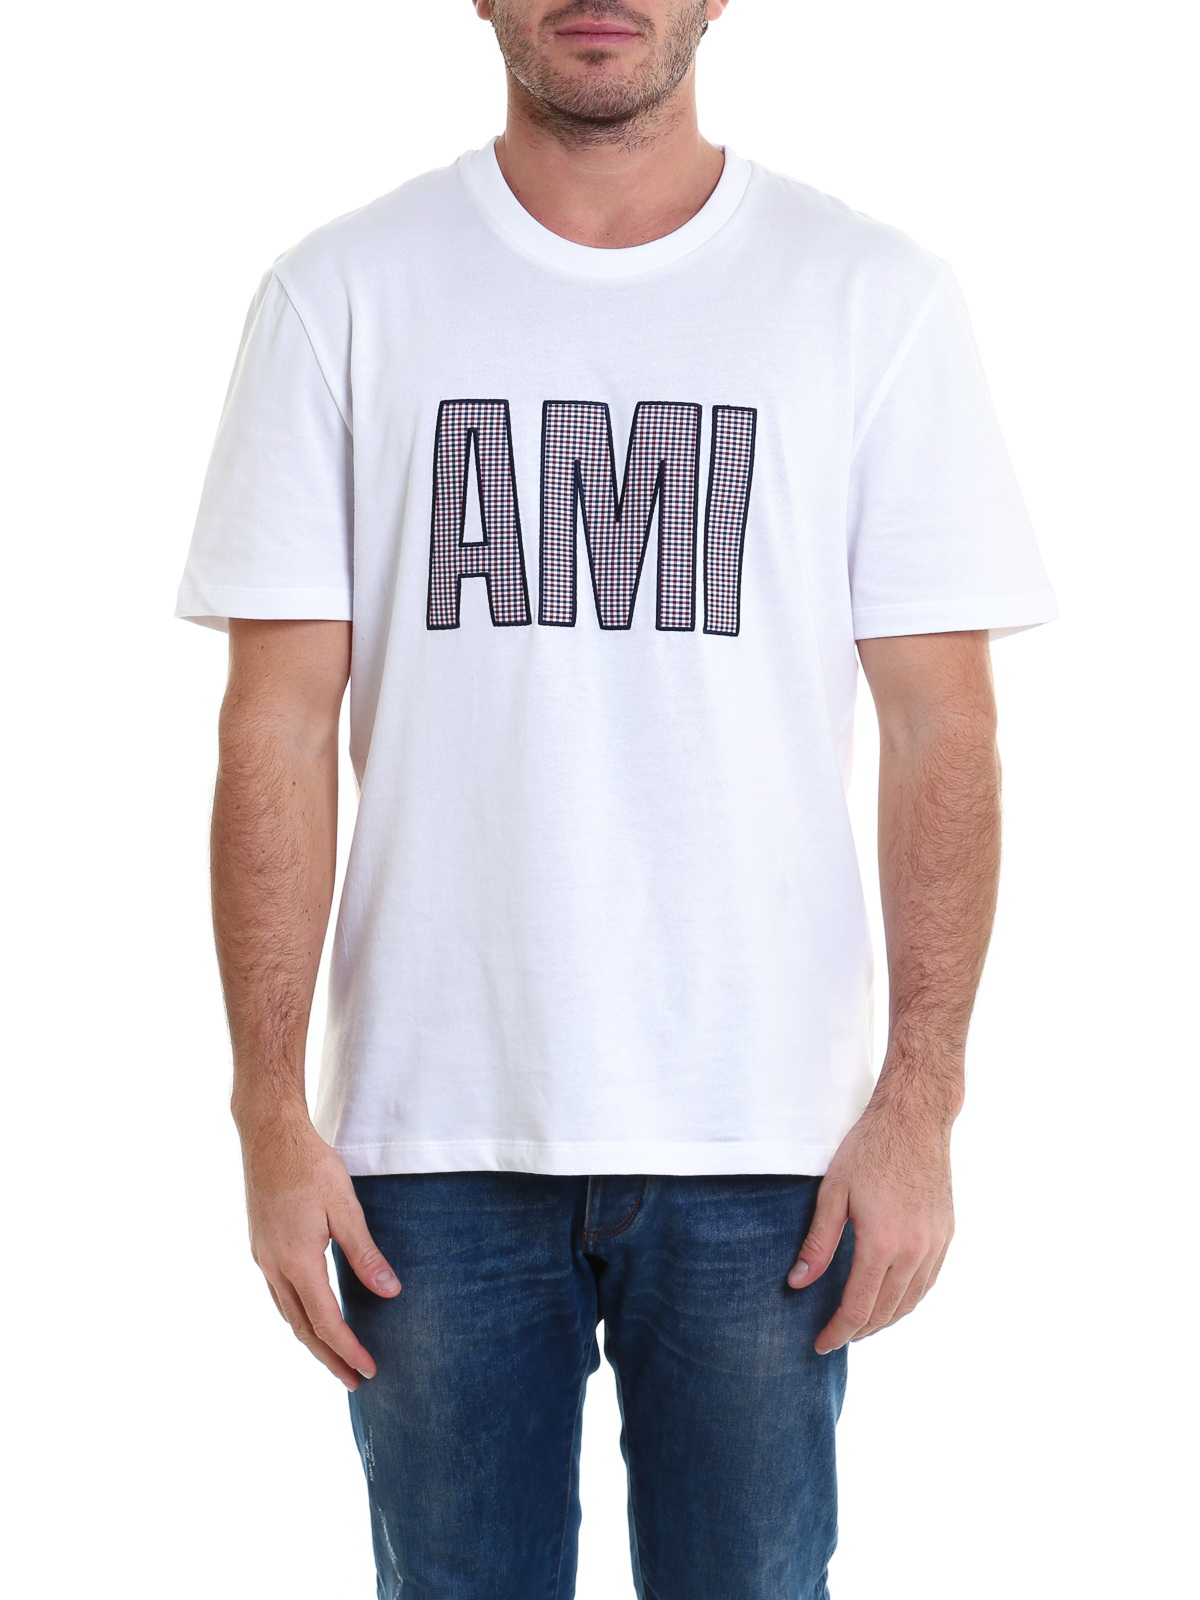 Tシャツ Ami Paris - Tシャツ メンズ - 白 - E17J120750100